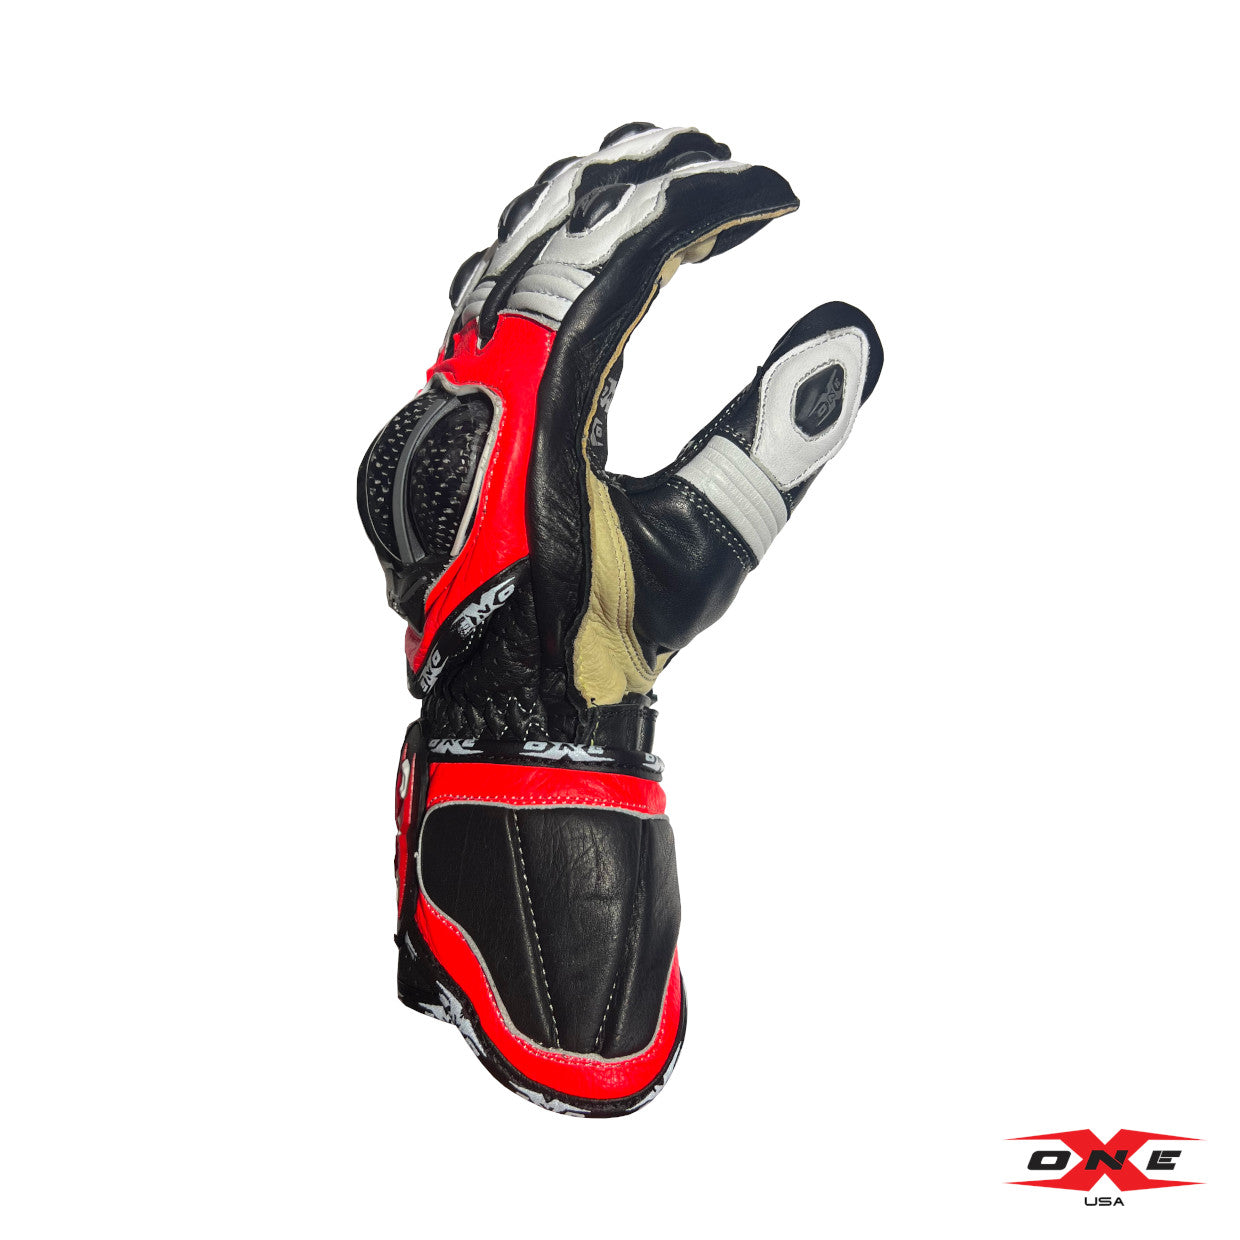 OneX USA Pro Race Gloves - Fluor Red